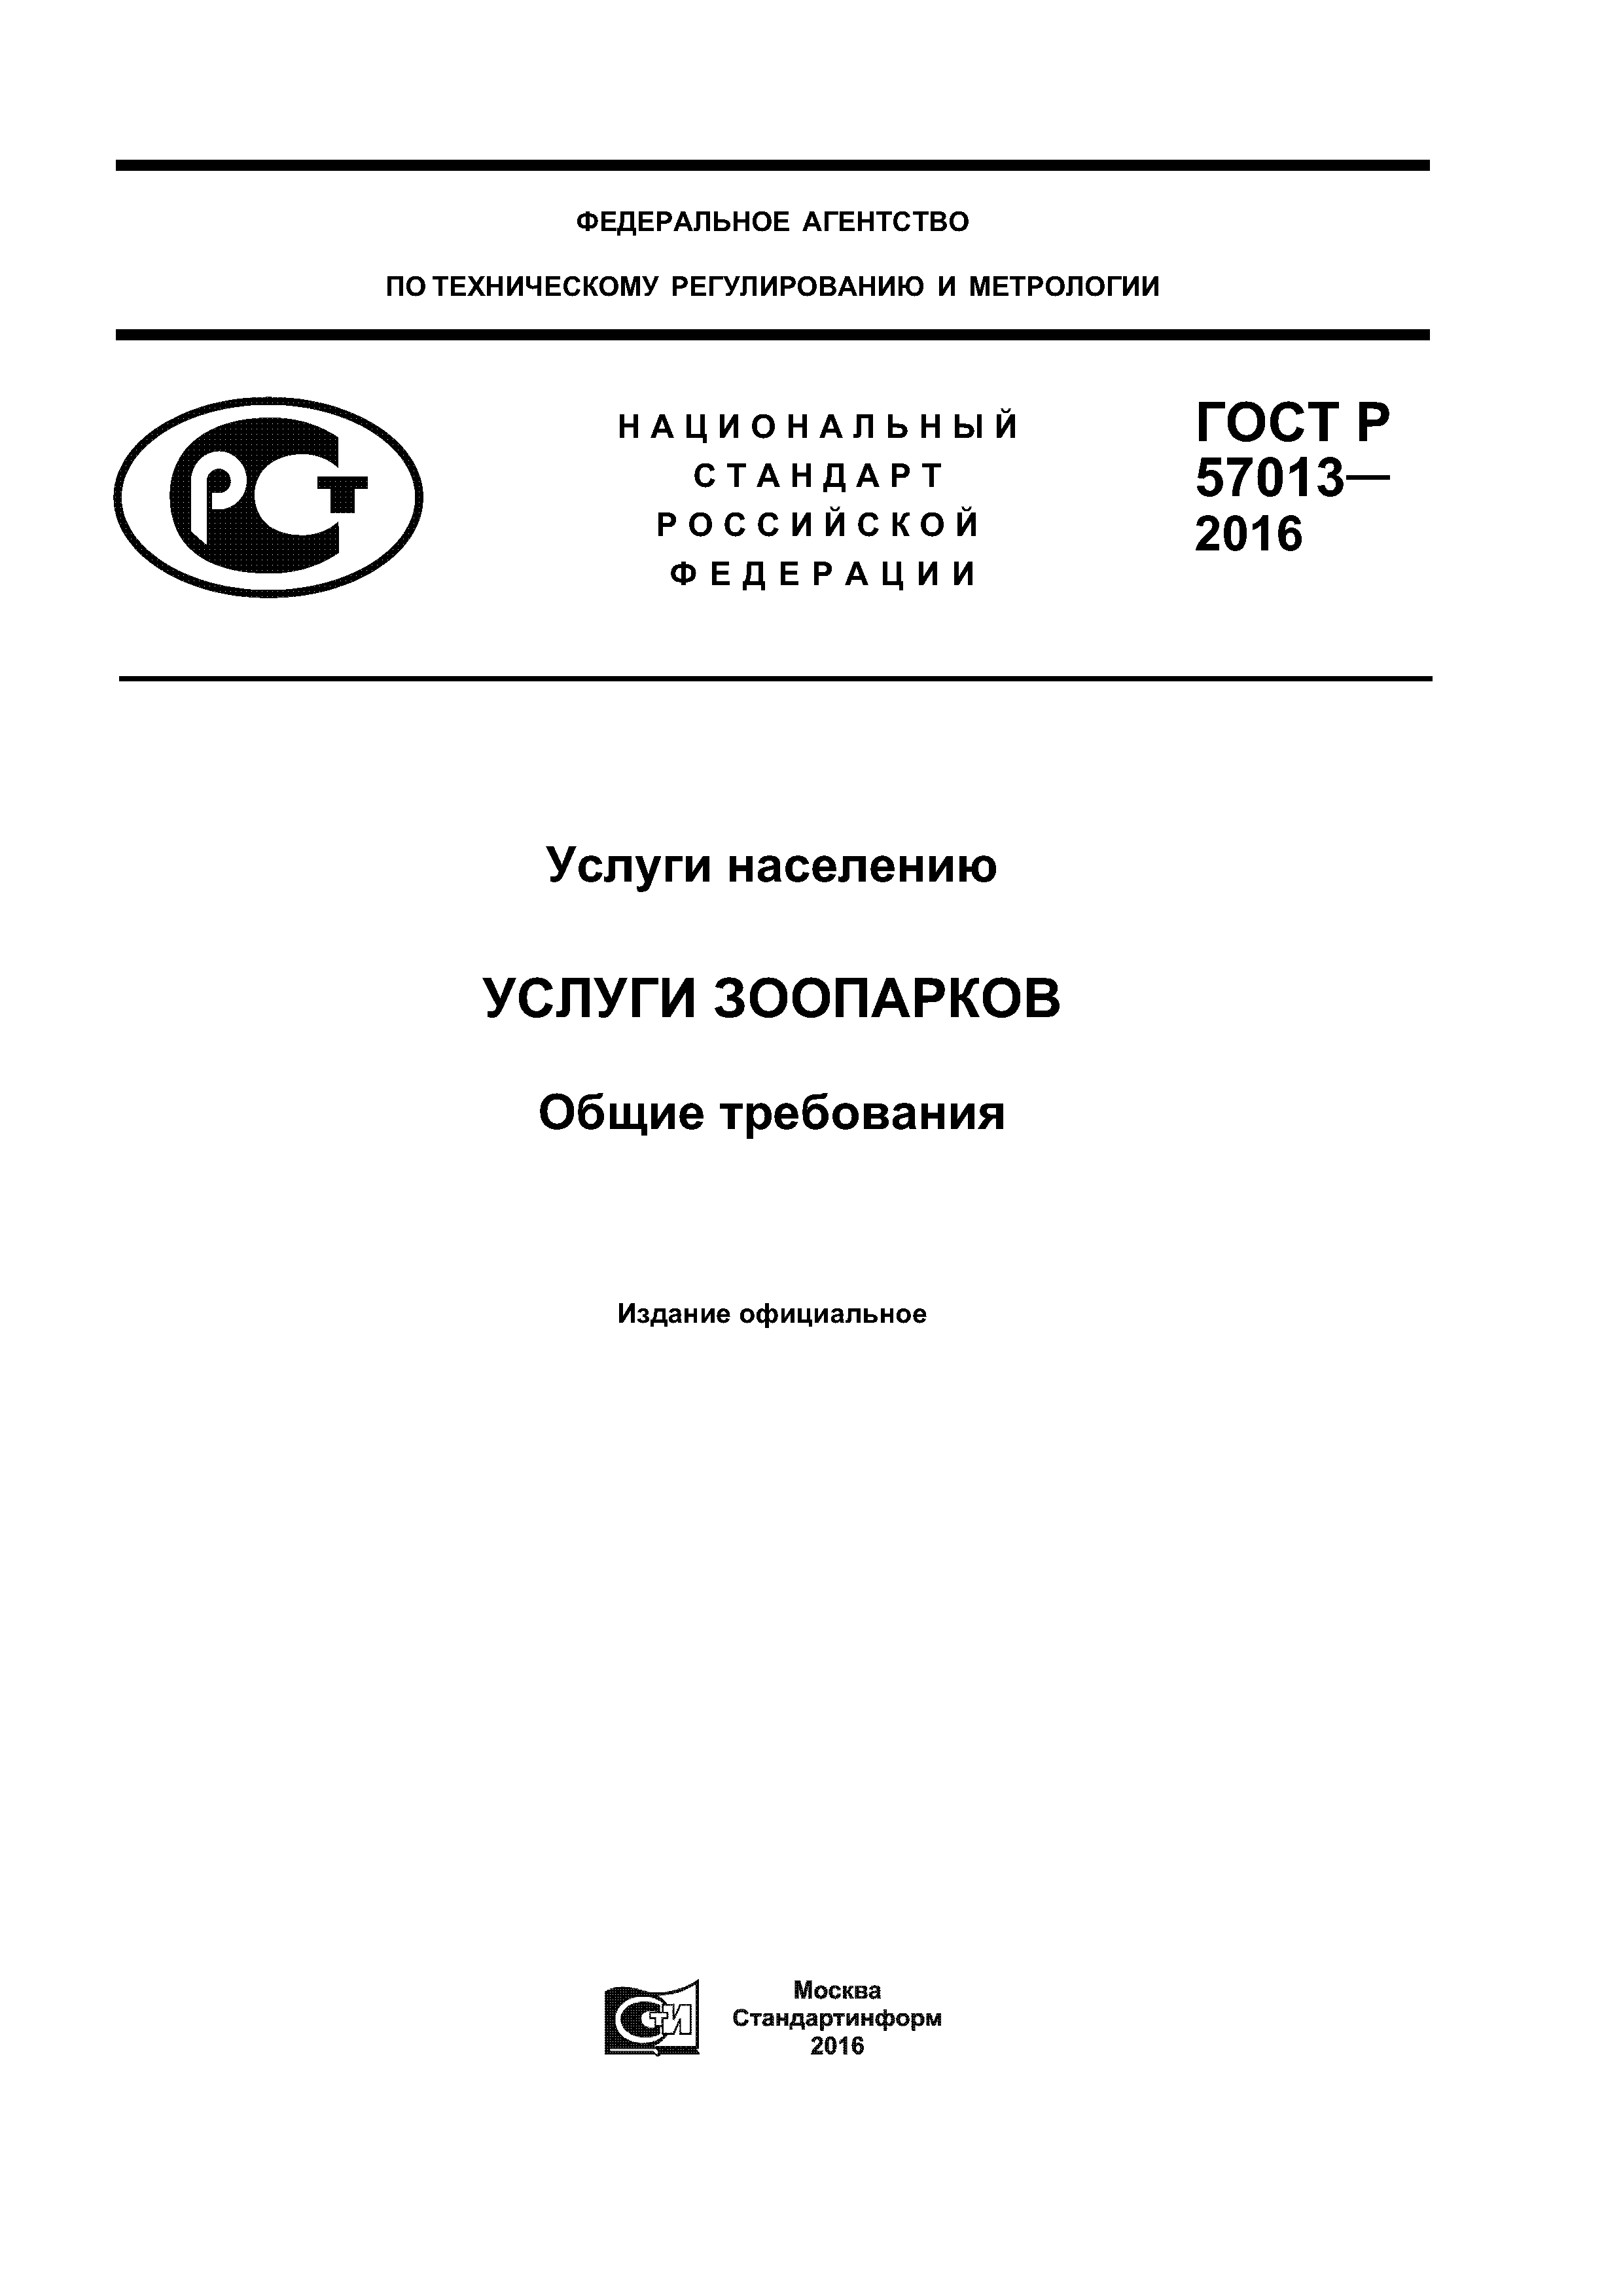 ГОСТ Р 57013-2016